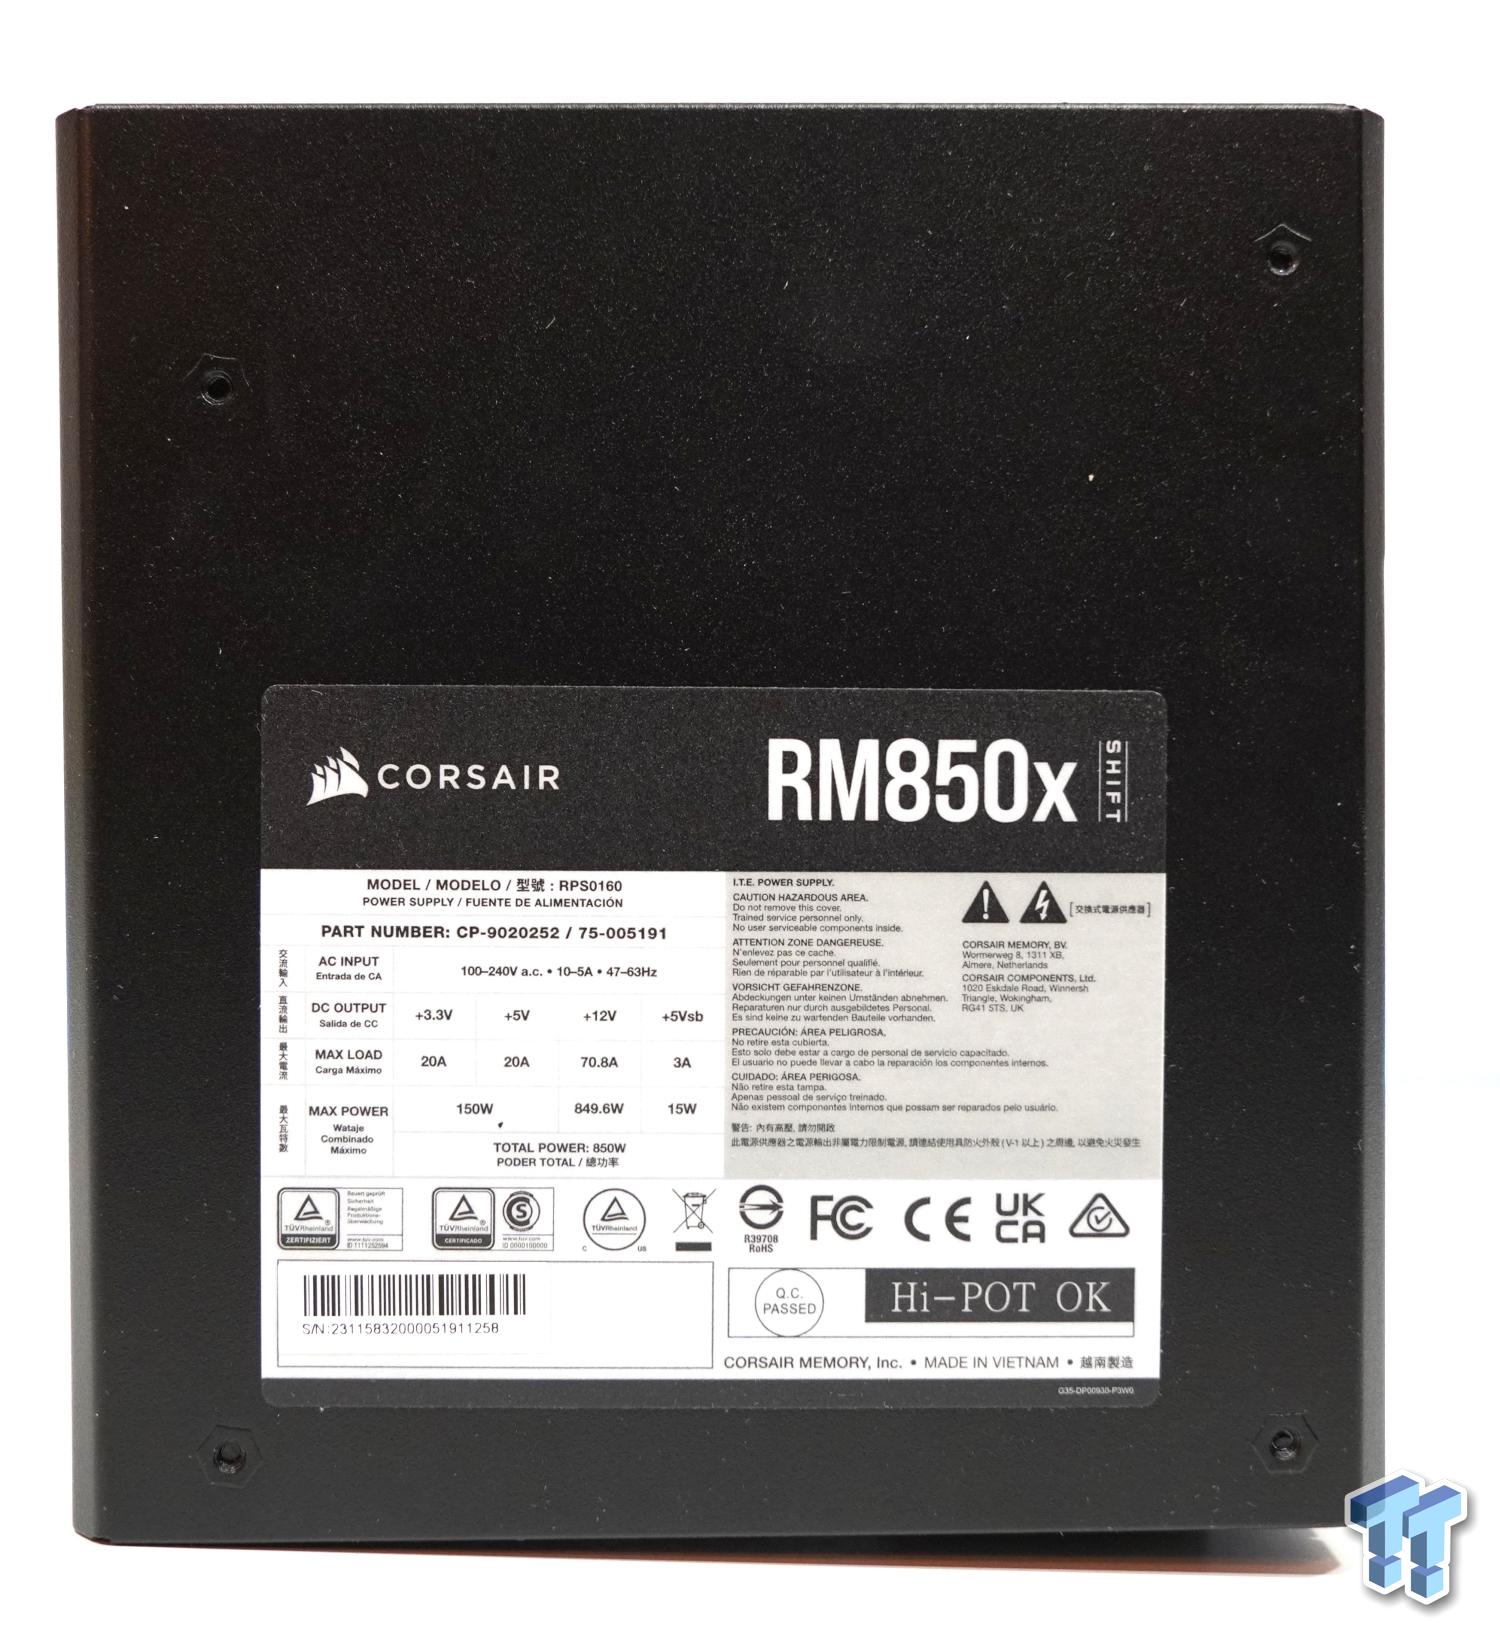 Corsair RM850x 850Watt 80 Plus Gold Certified Power Supply White